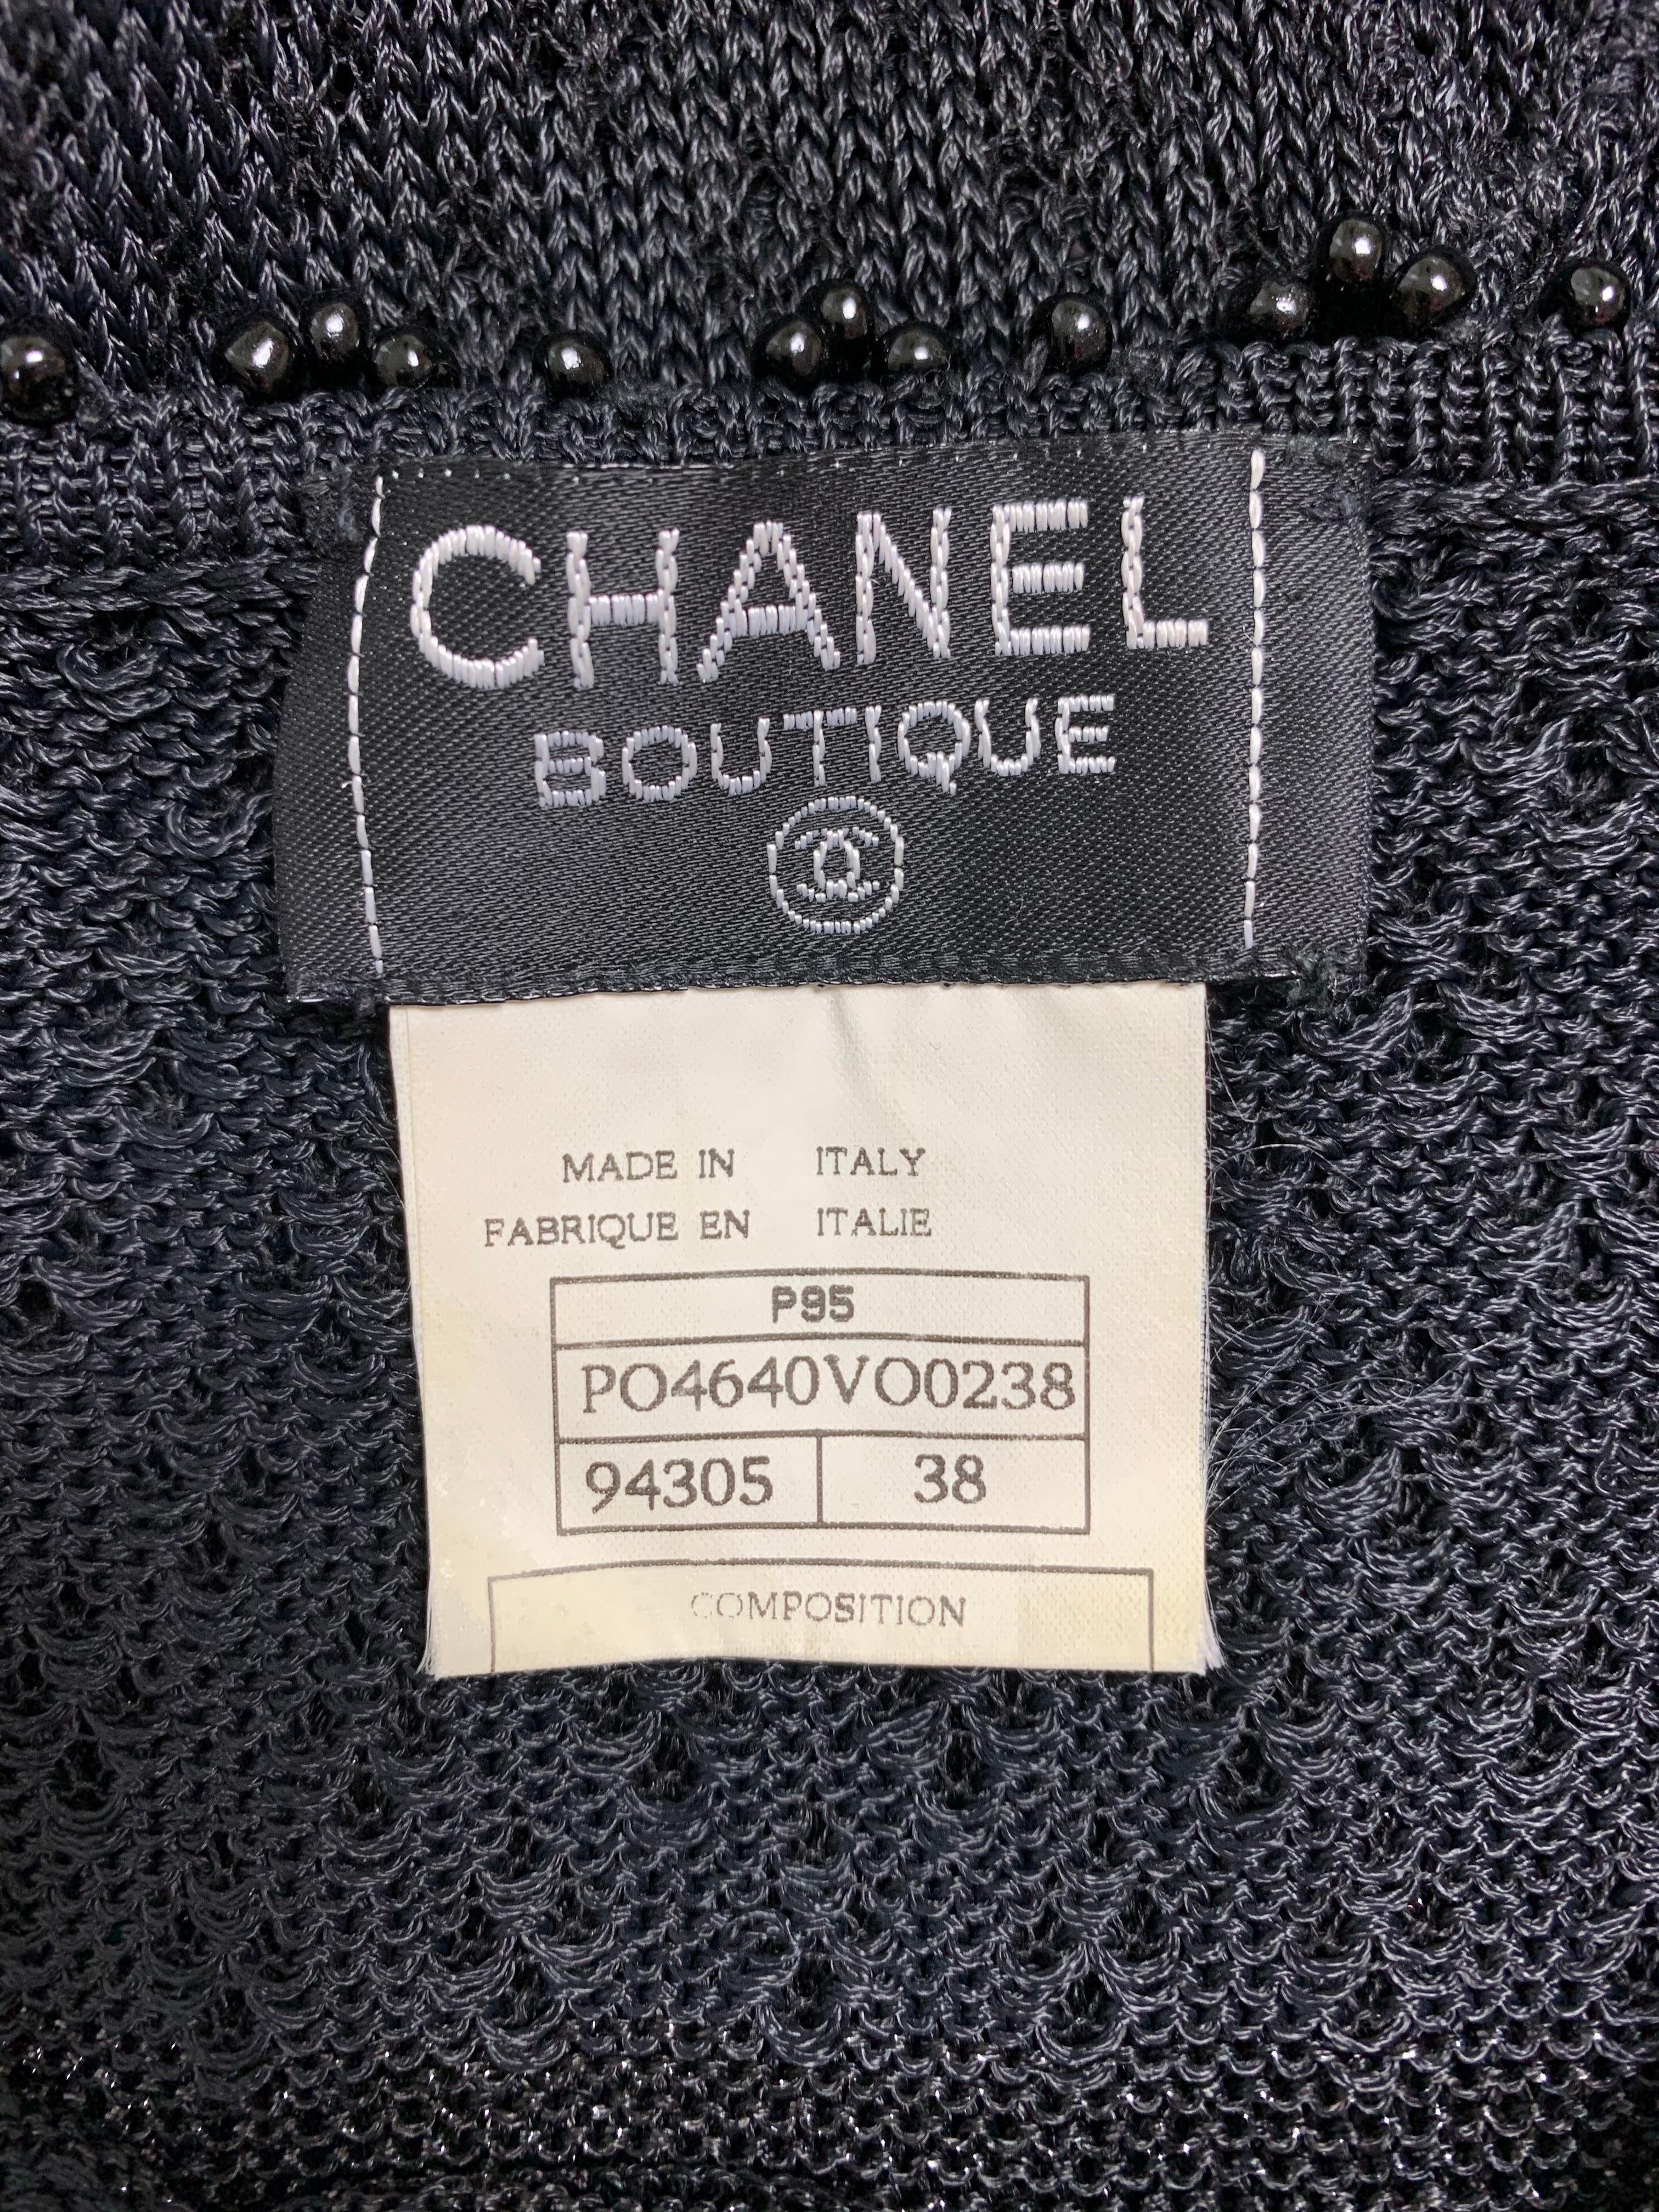 S/S 1995 Chanel Karl Lagerfeld Runway Sheer Black Knit Beaded Mini Dress In Good Condition In Yukon, OK